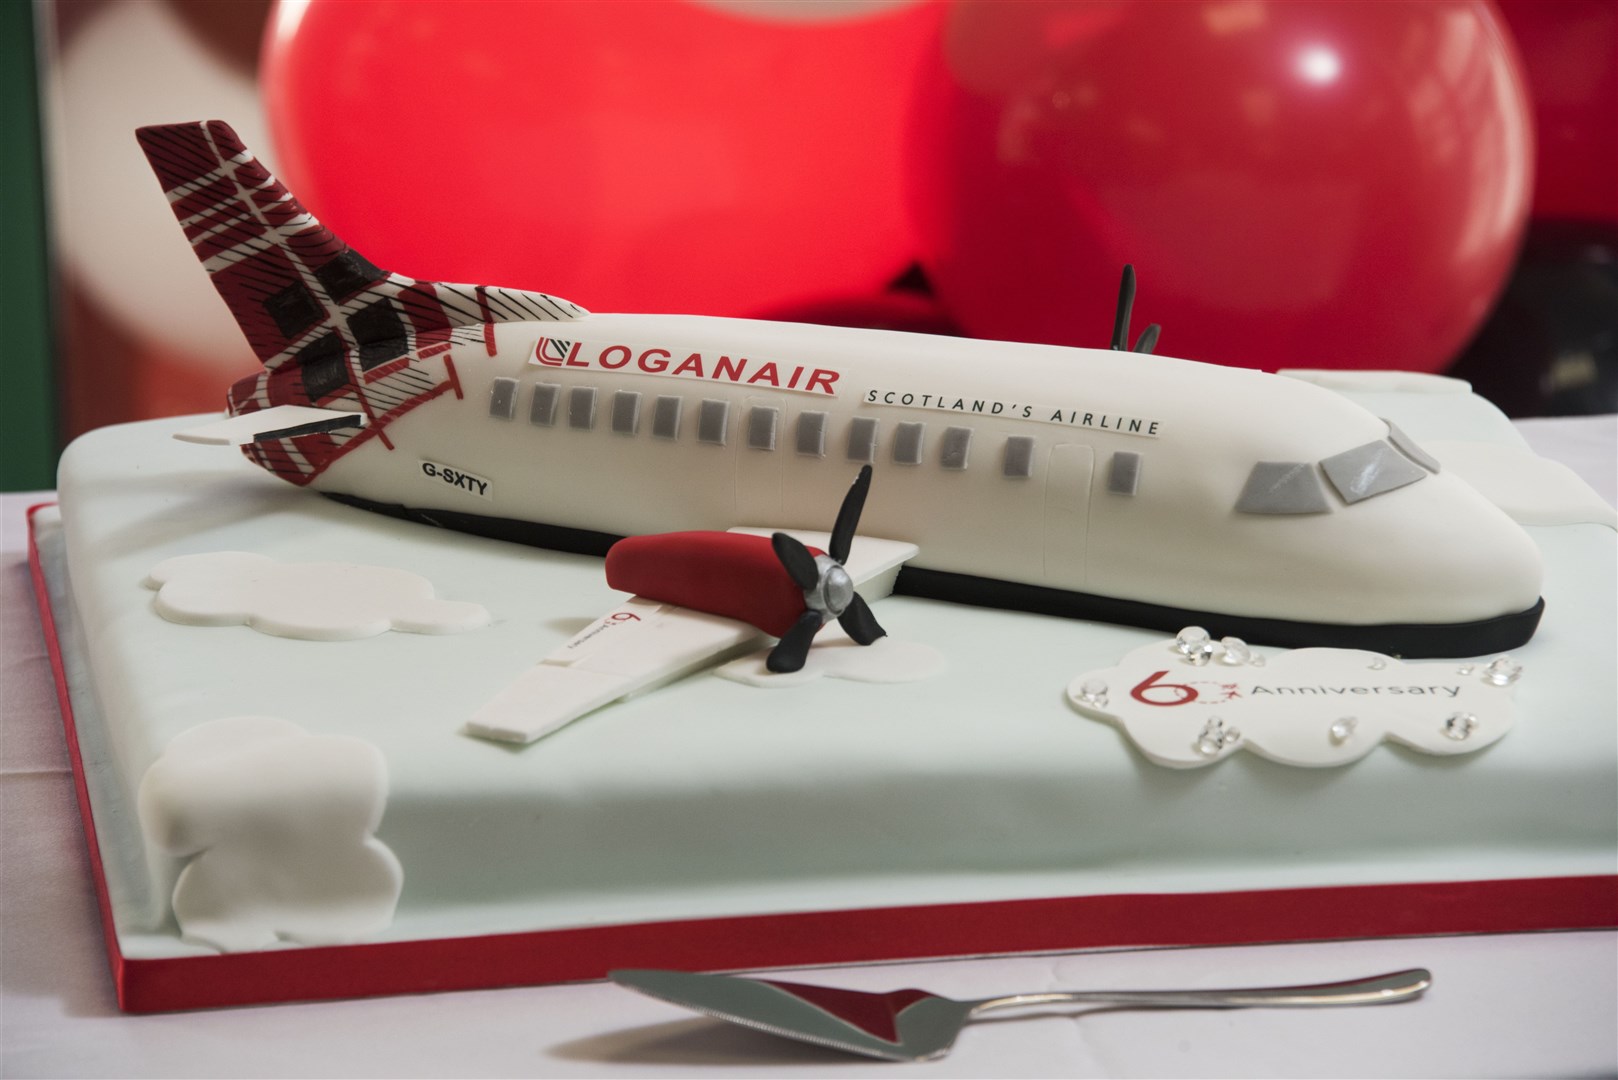 Loganair's very appropriate 60th birthday cake design.